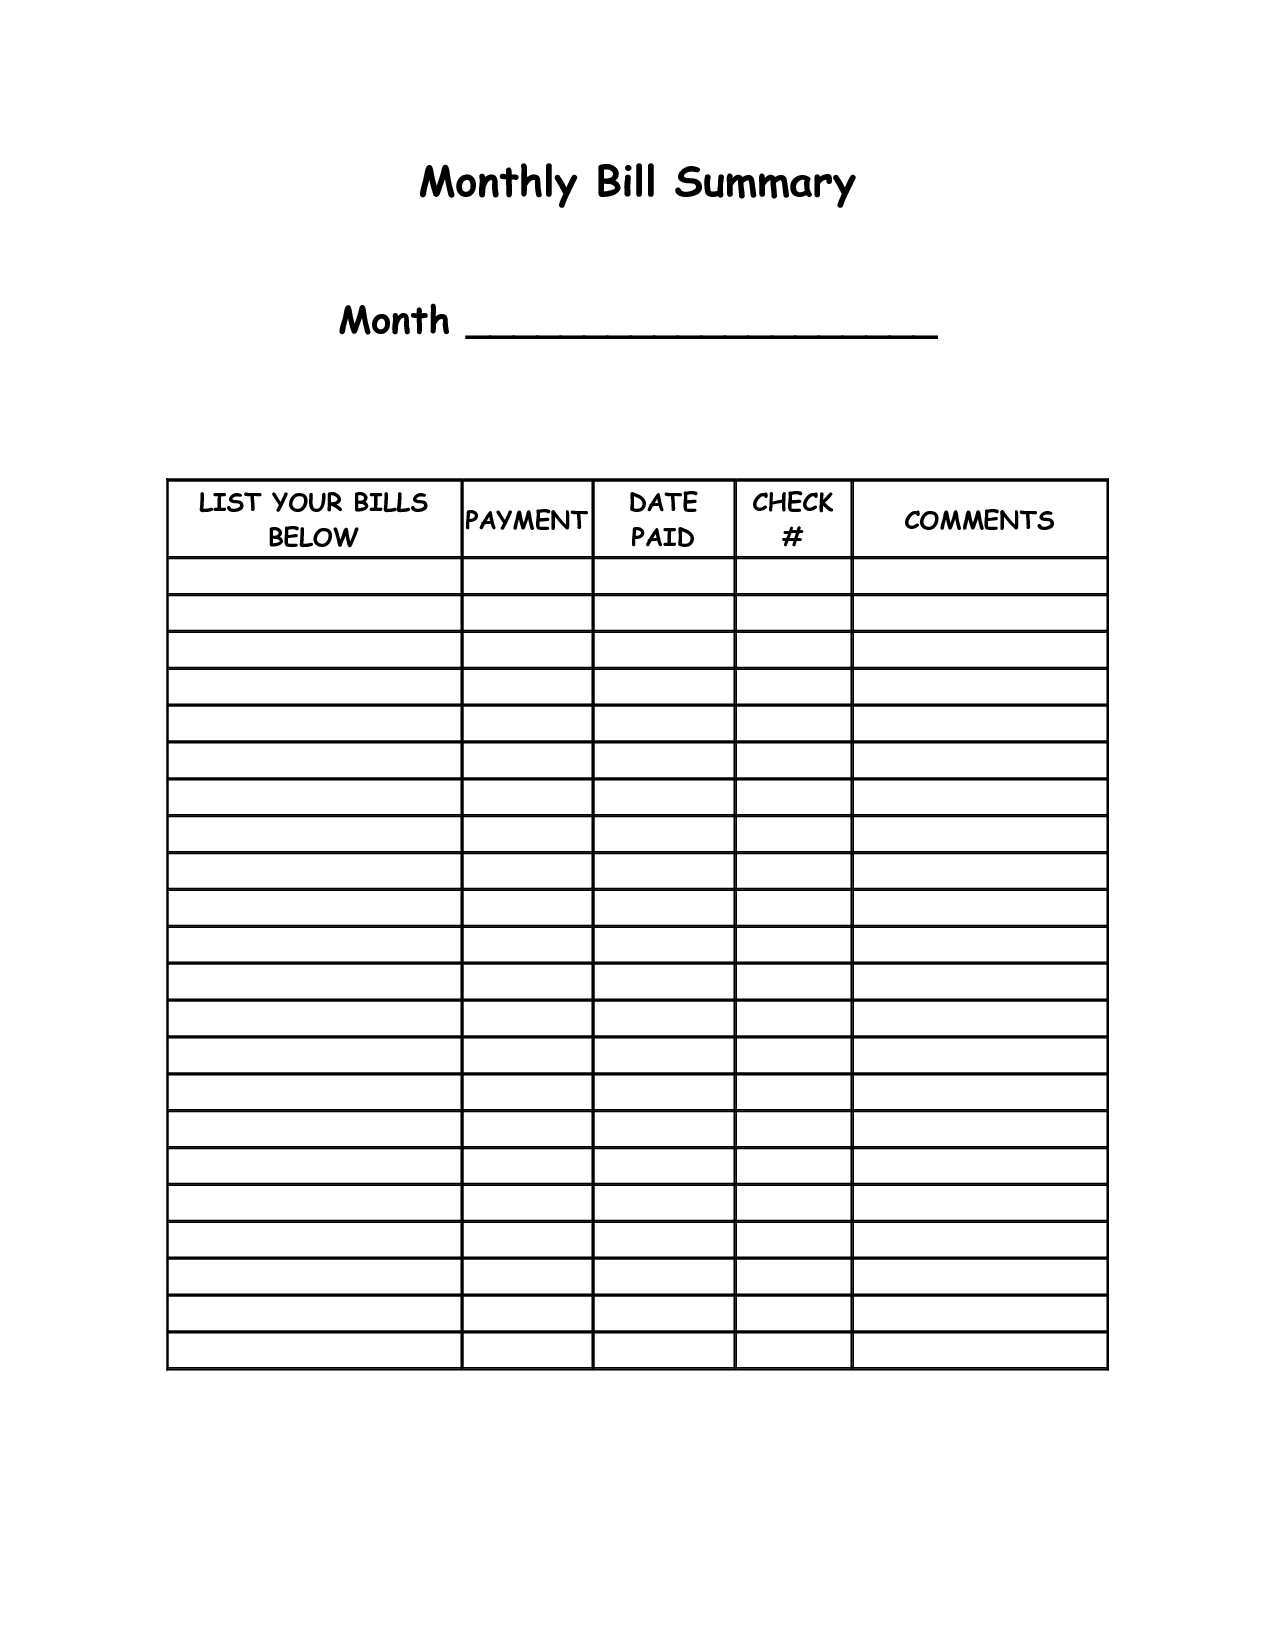 Monthly Bill Summary Doc | Organizing Monthly Bills, Bill-Monthly Bill List Printable